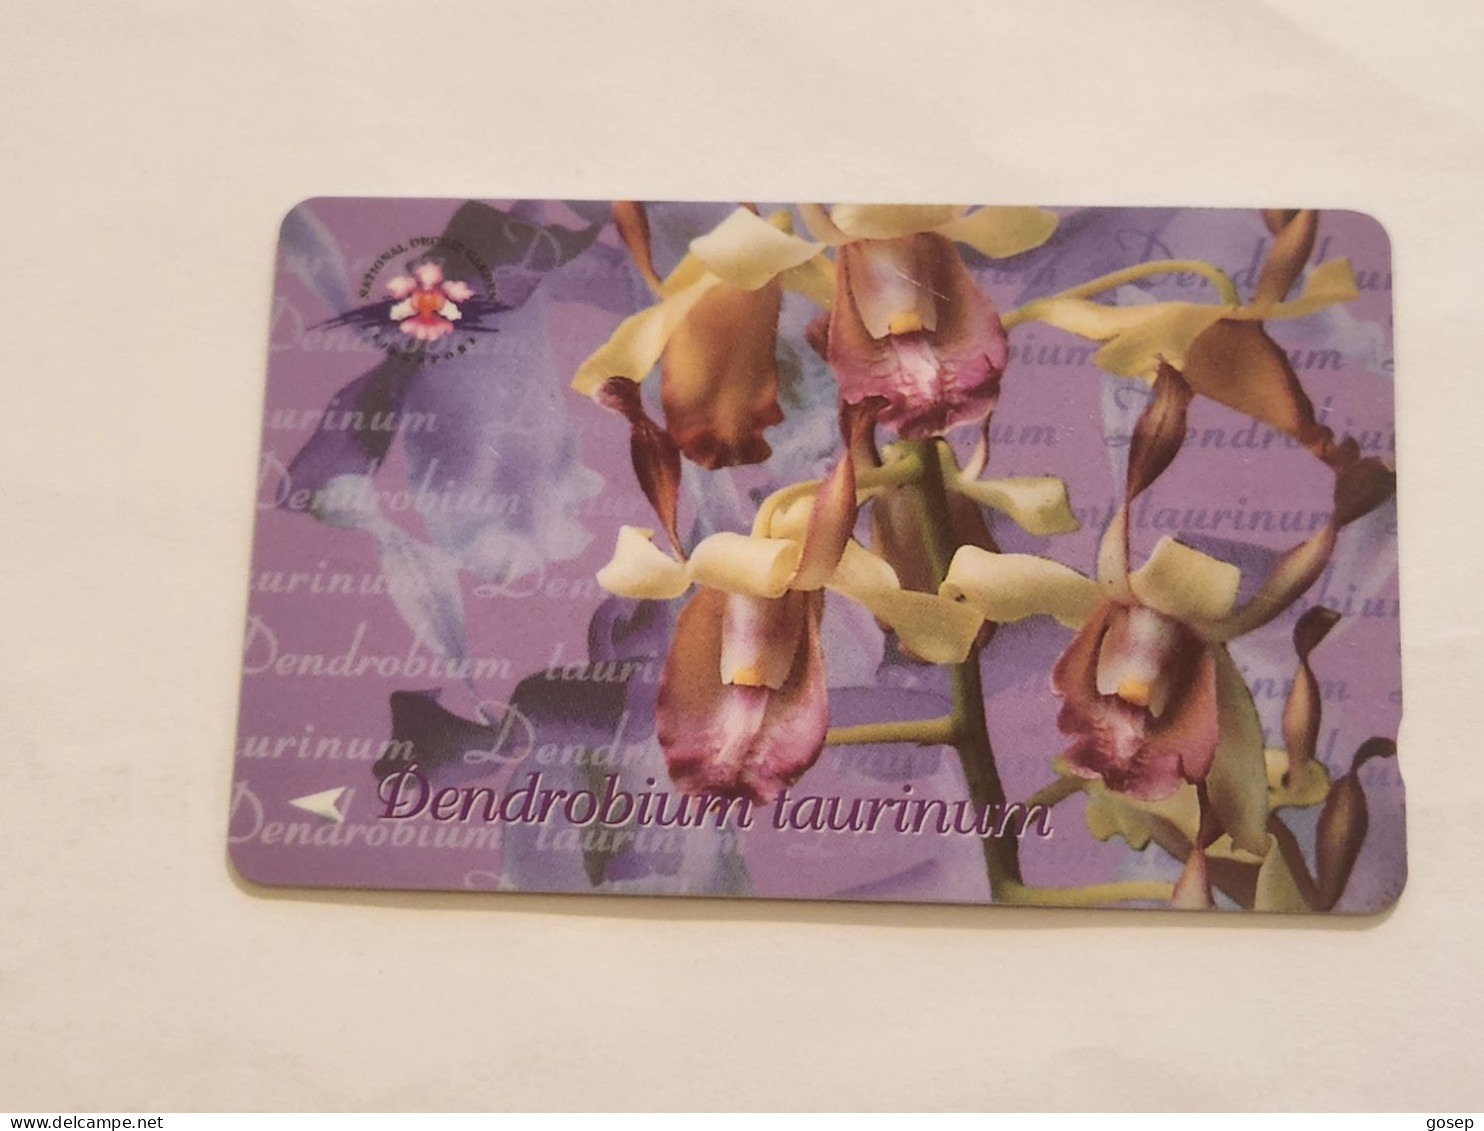 SINGAPORE-(154SIGB-0/c)Dendrobium Lasianthe(294)($10)( 154SIGB-242239)(tirage?)(1/98)used Card+1card Prepiad Free - Singapour